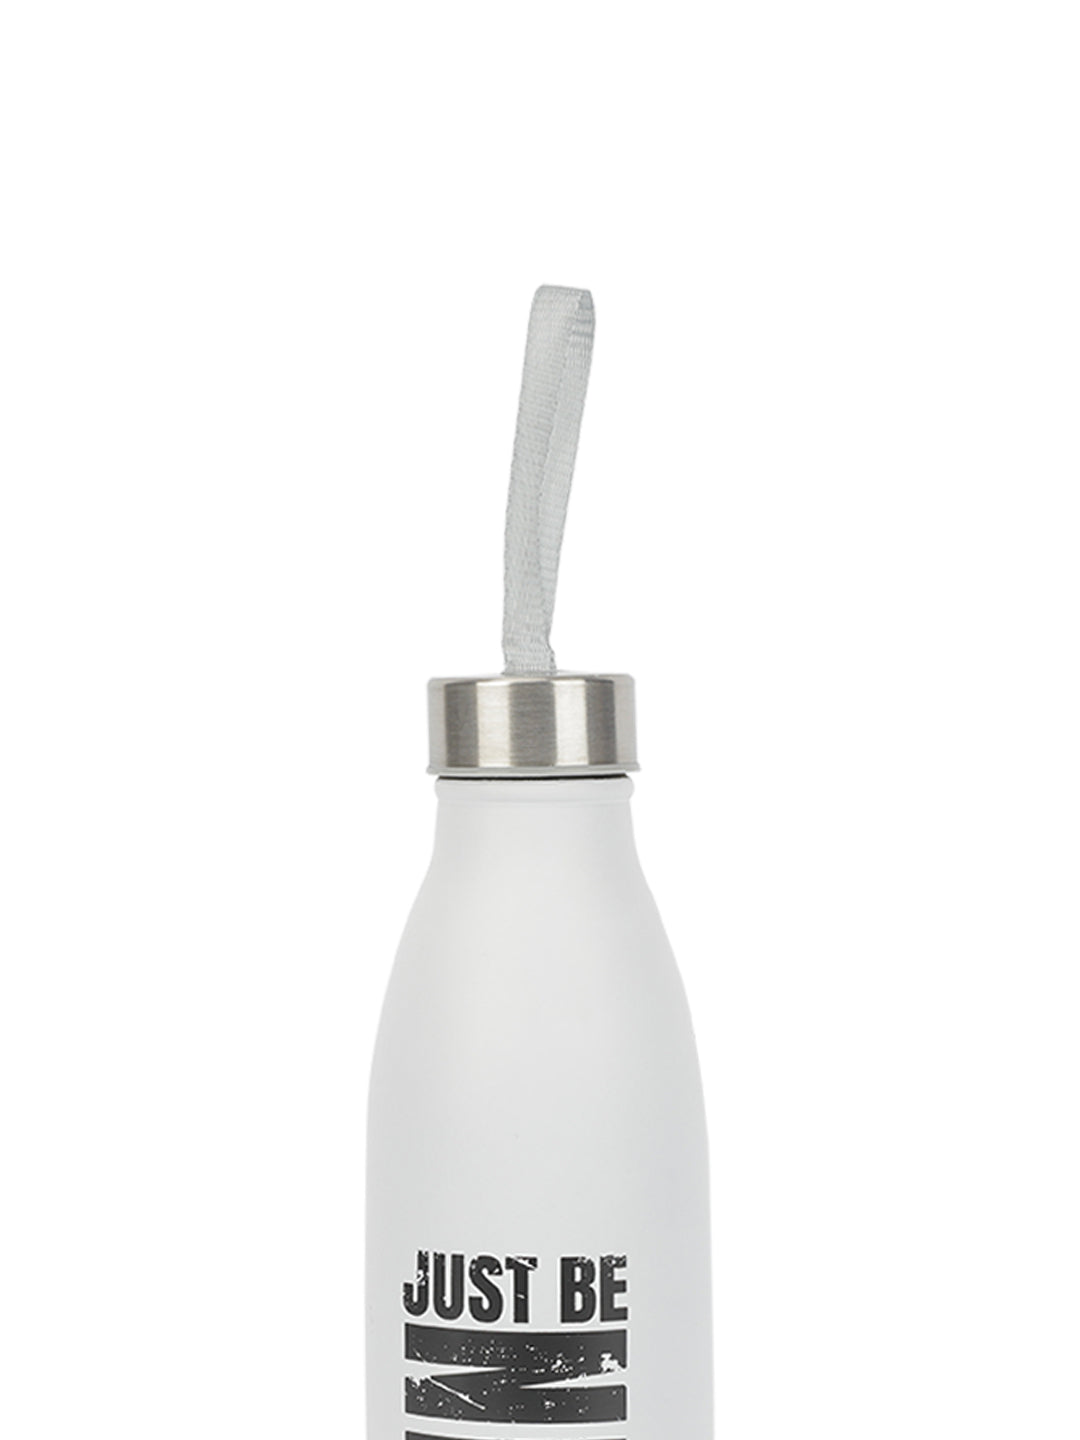 VON CASA 750Ml Stainless Steel Water Bottles With Rope - White